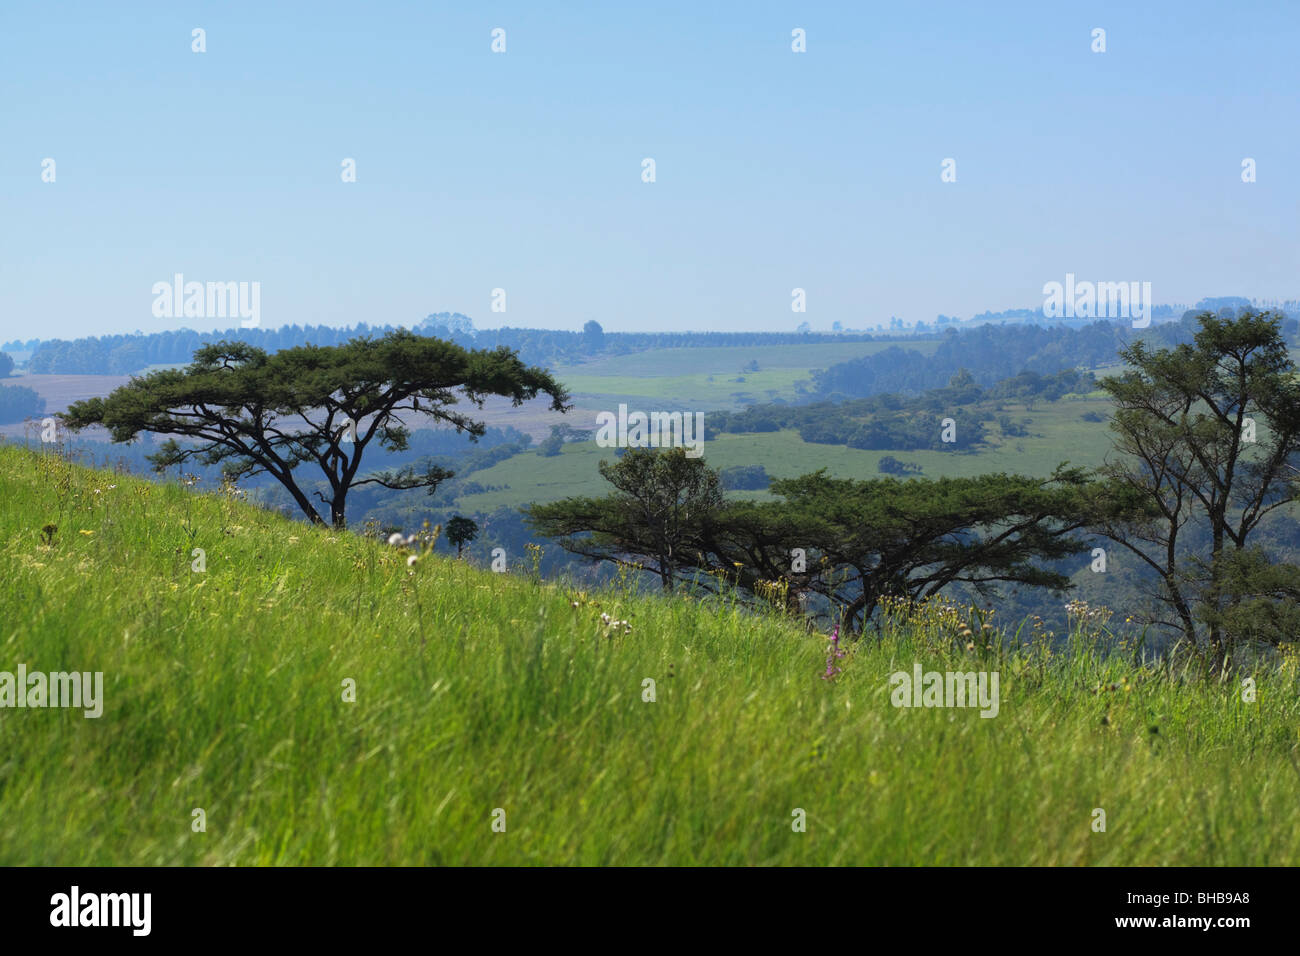 Lush slopes of African savanna with common Umbrella Thorn Acacia trees. Genus; Acacia. Species; Tortili. South Africa. Stock Photo